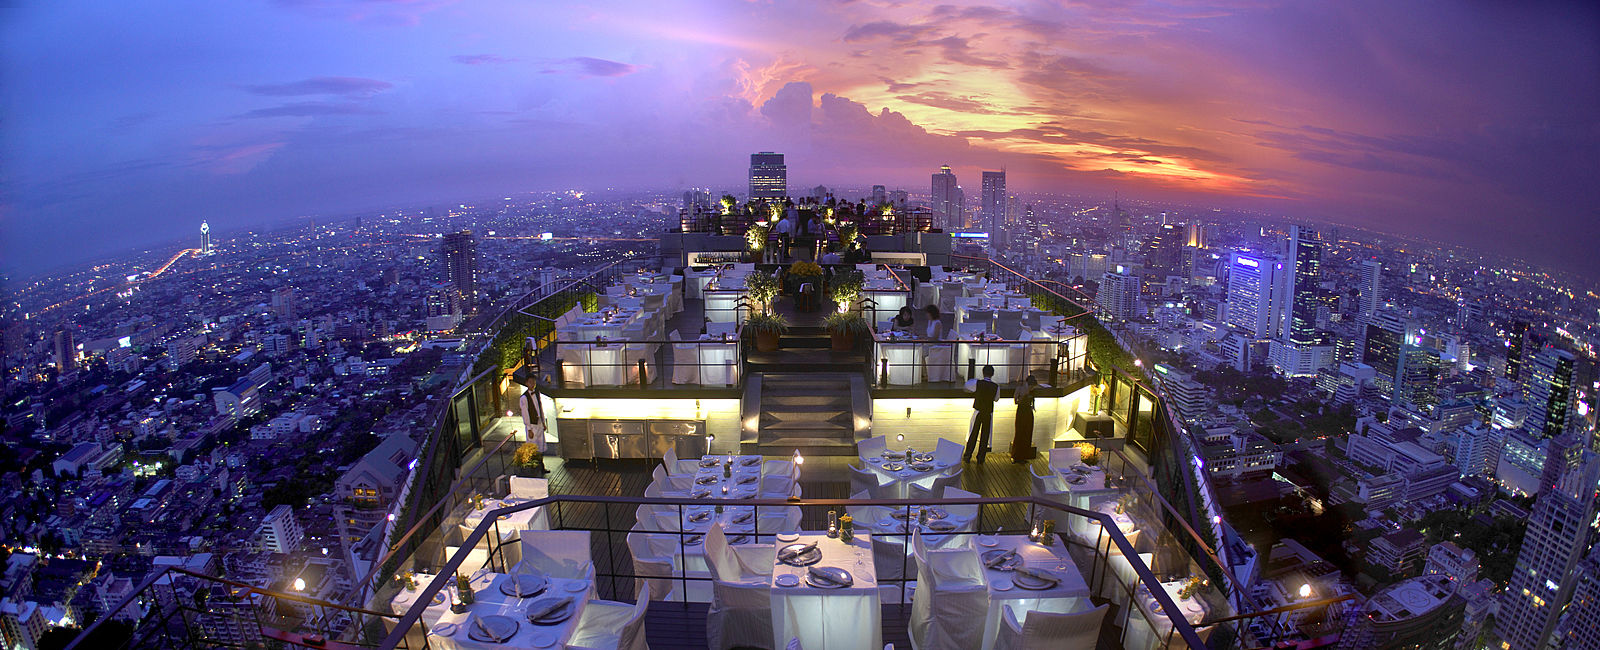 HOTEL ANGEBOTE
 Banyan Tree Bangkok: -33% und mehr  
